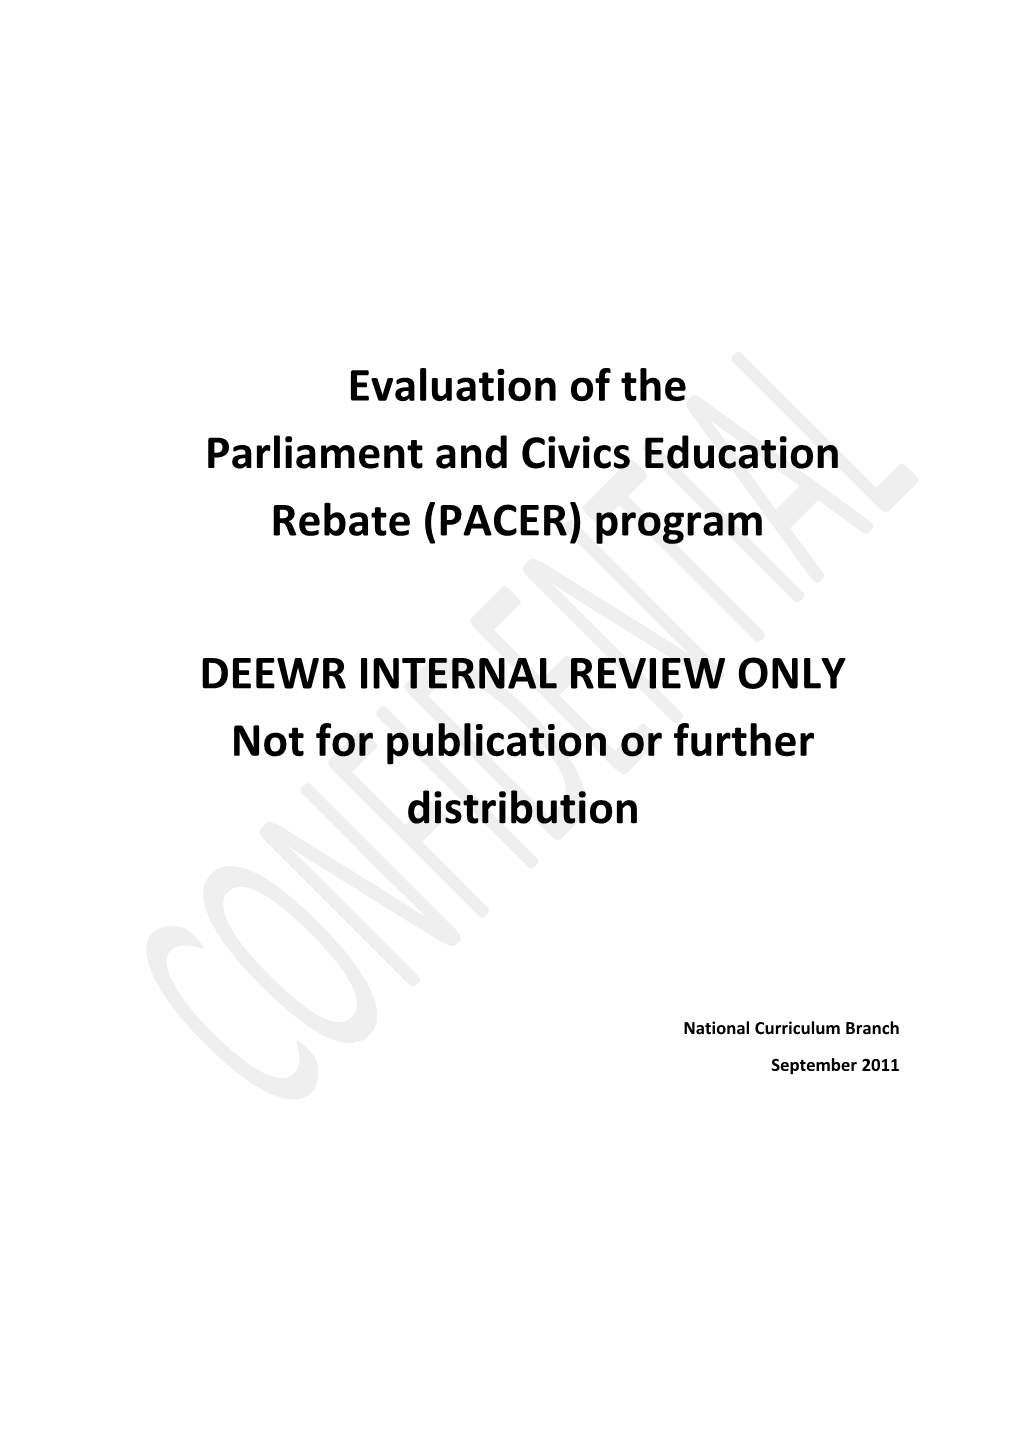 PACER Program Evaluation